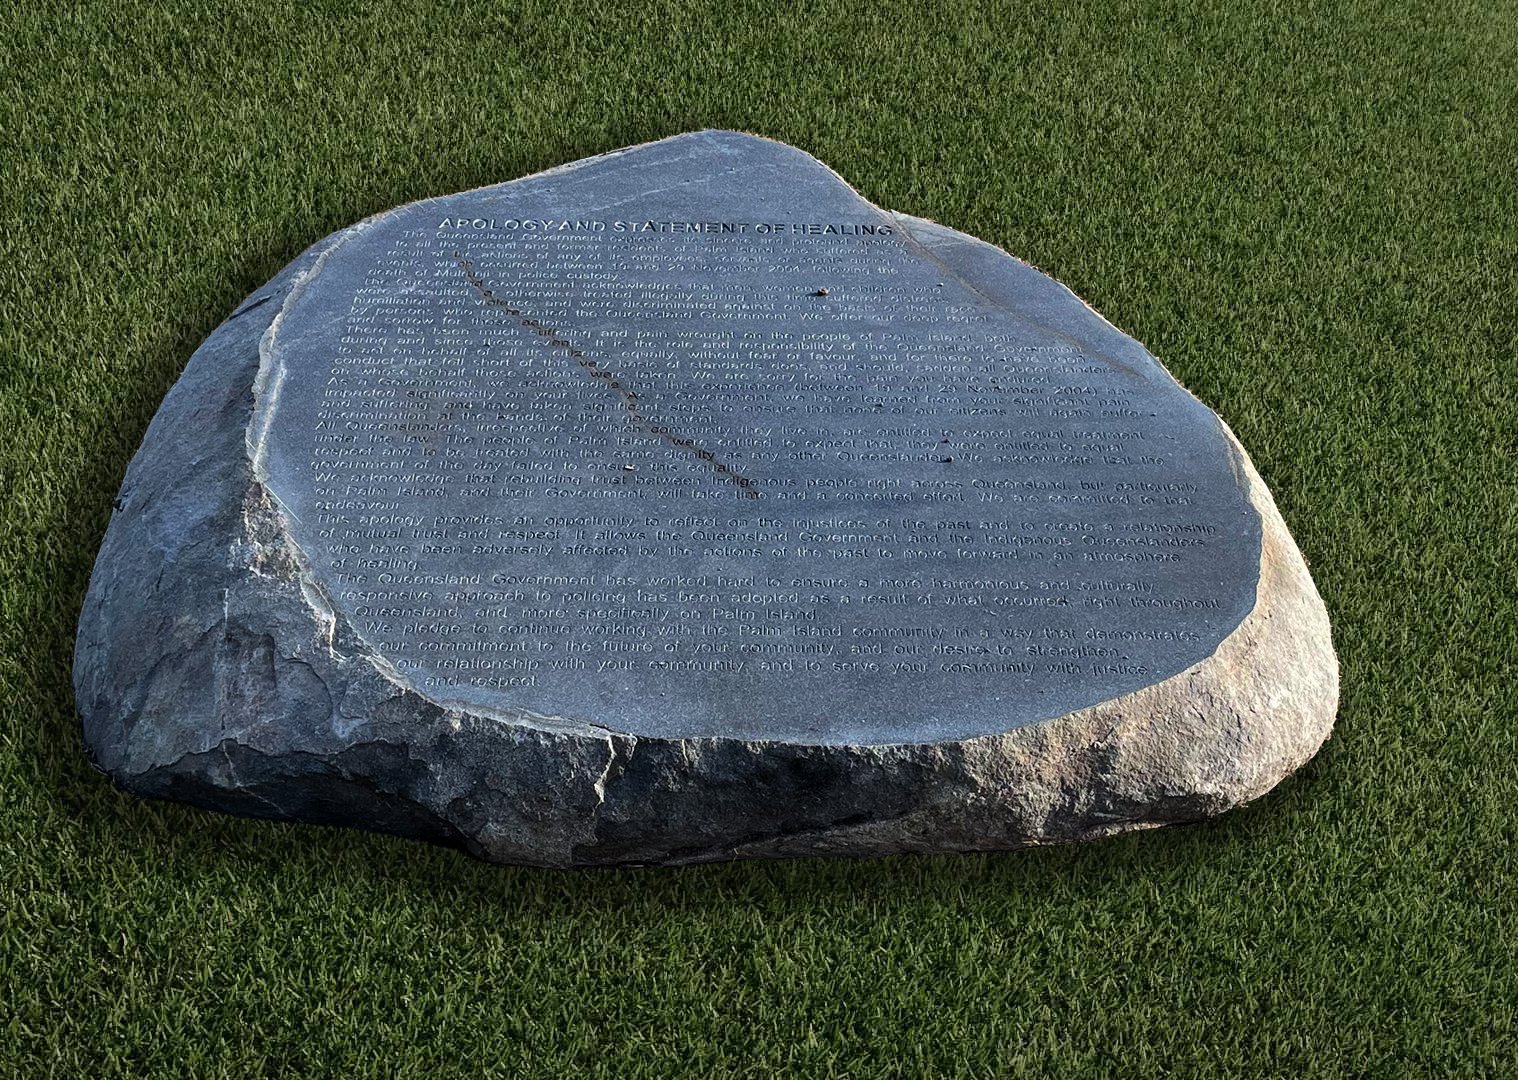 Memorial to Mulrinju -Apology and statement of healing stone